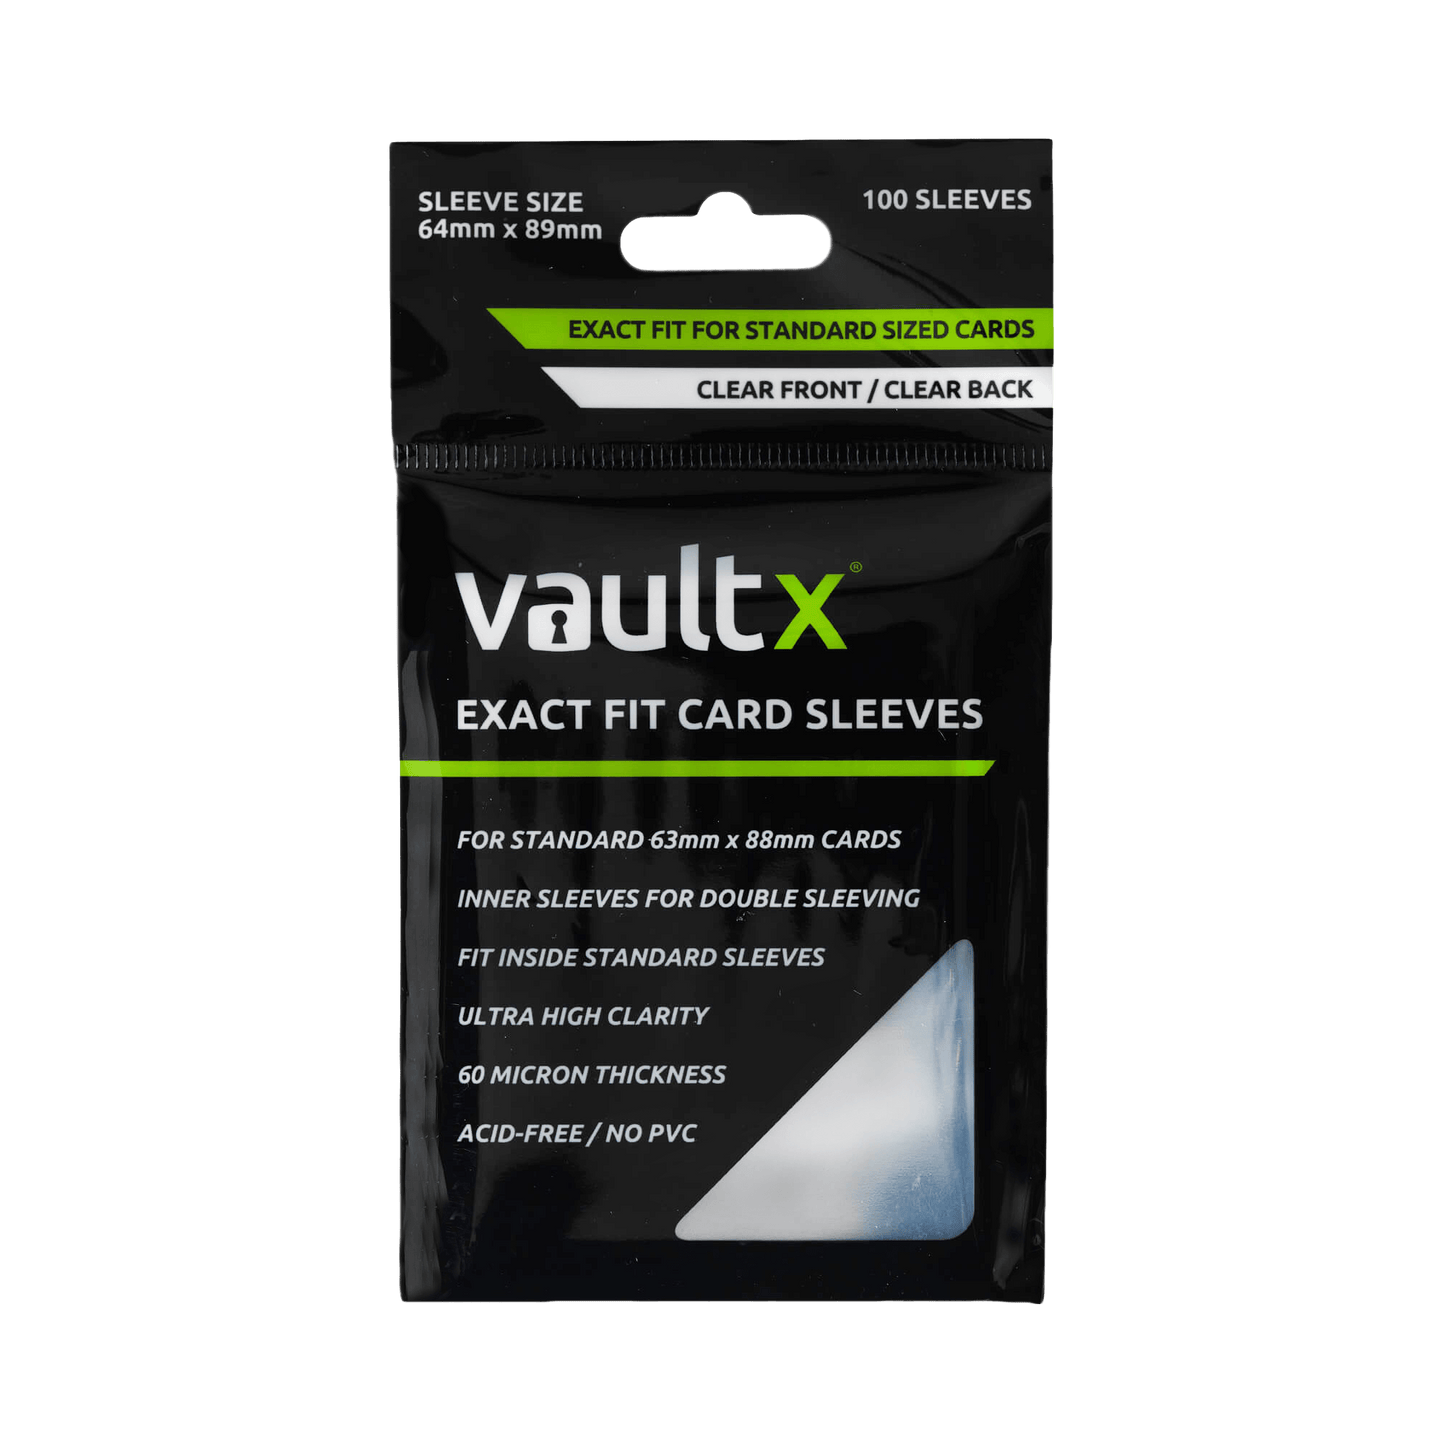 The Best Sleeves Series  Vault-X Exact Fit Inner Sleeves Review